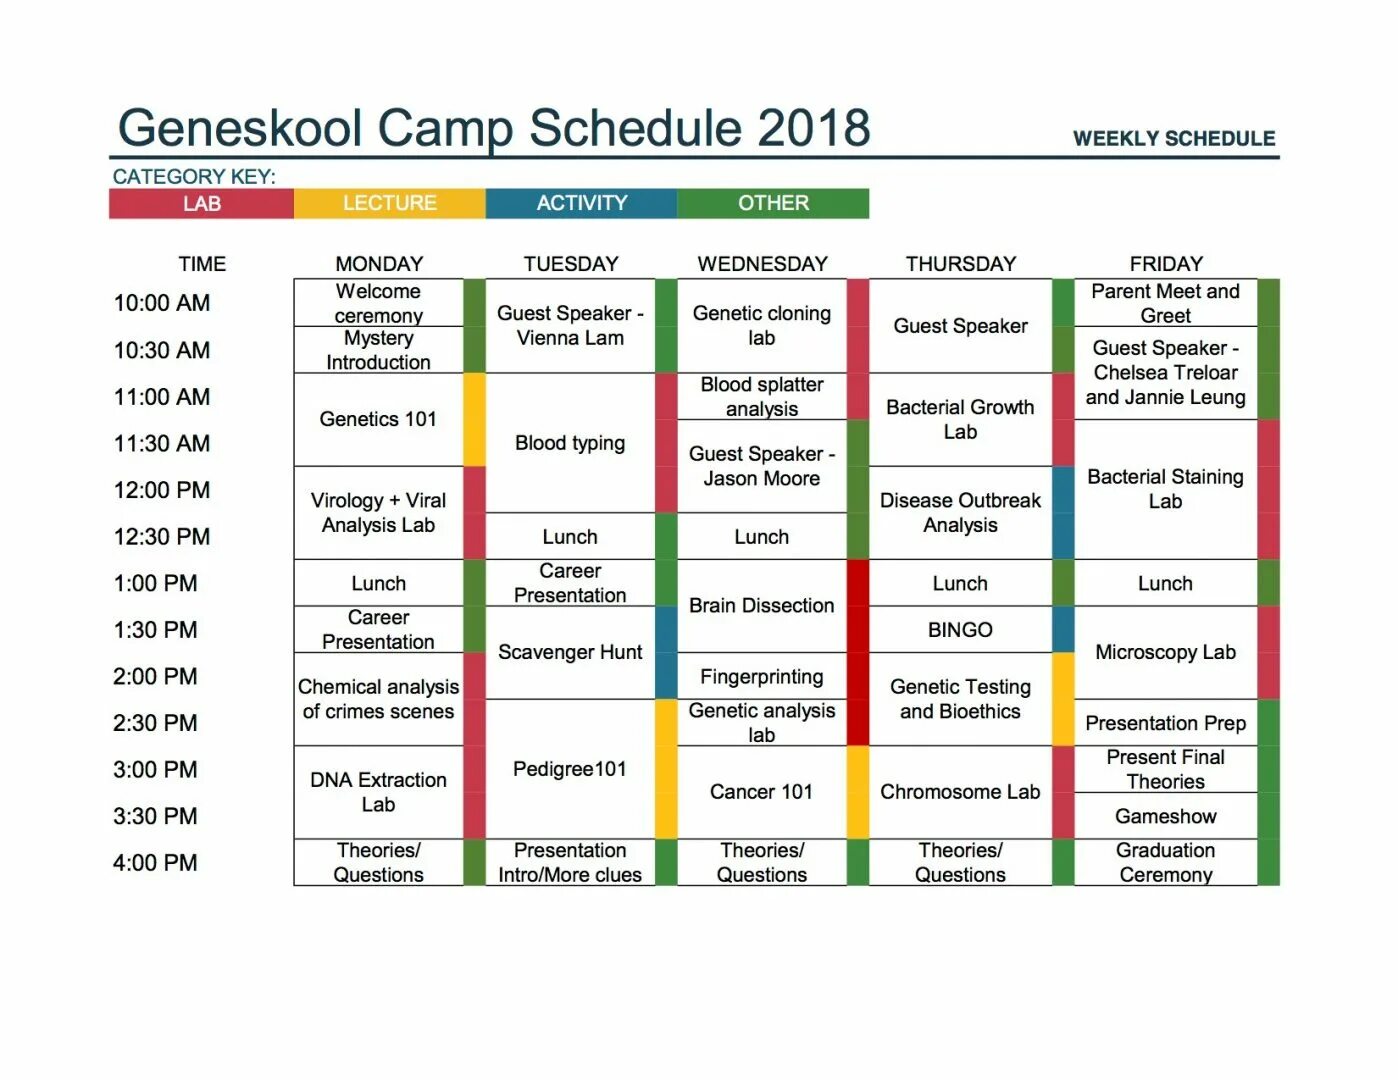 Schedule. Most Camp расписание. Life Schedule. TV programme Schedule. Кэмп афиша расписание